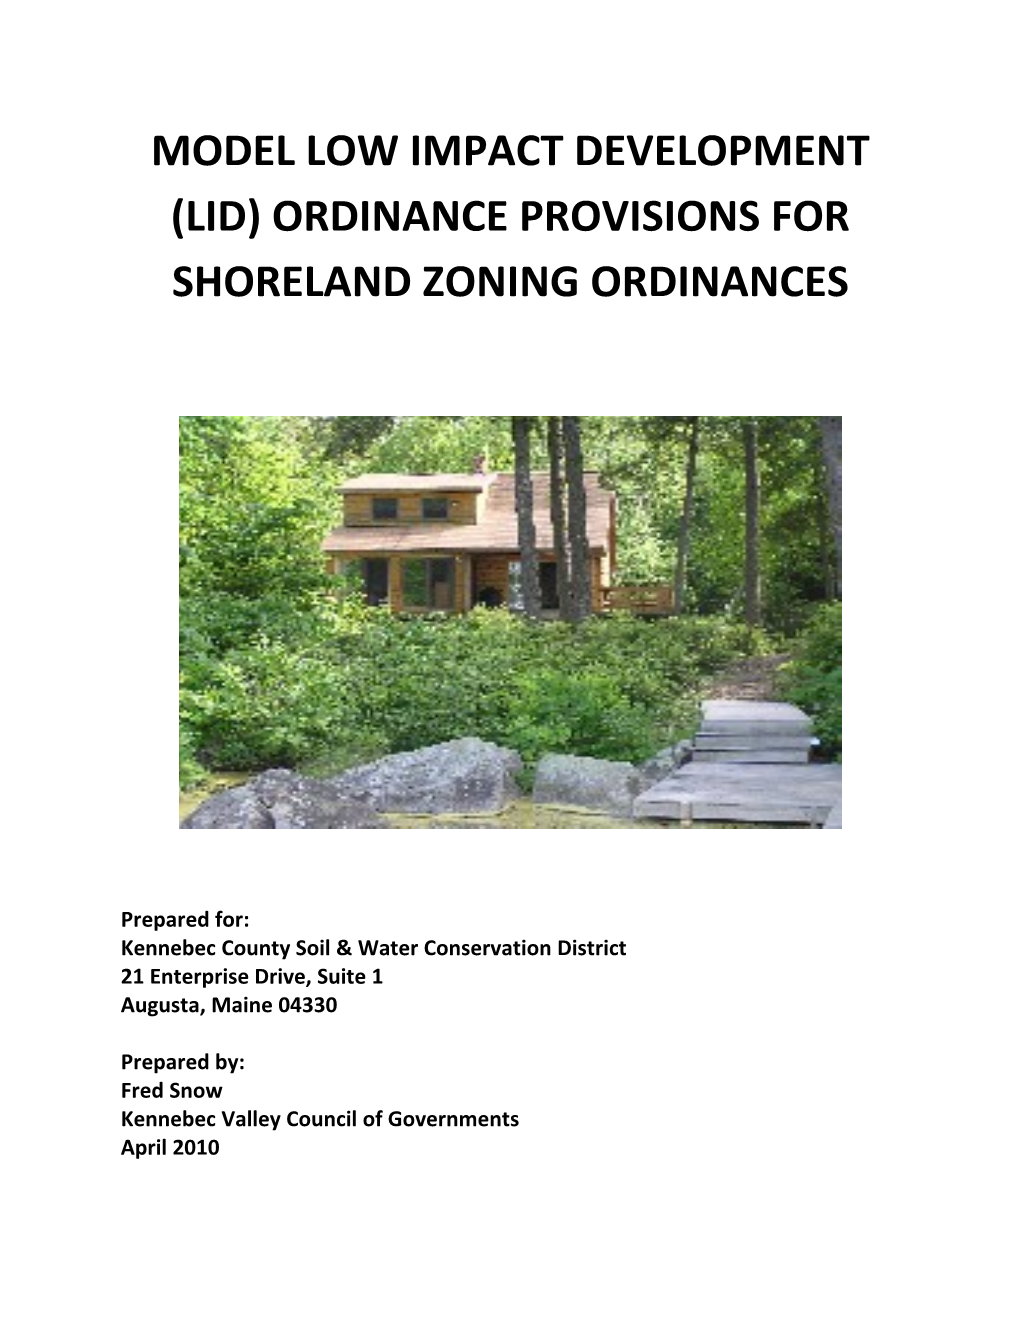 Model Low Impact Development (Lid) Ordinance Provisions for Shoreland Zoning Ordinances